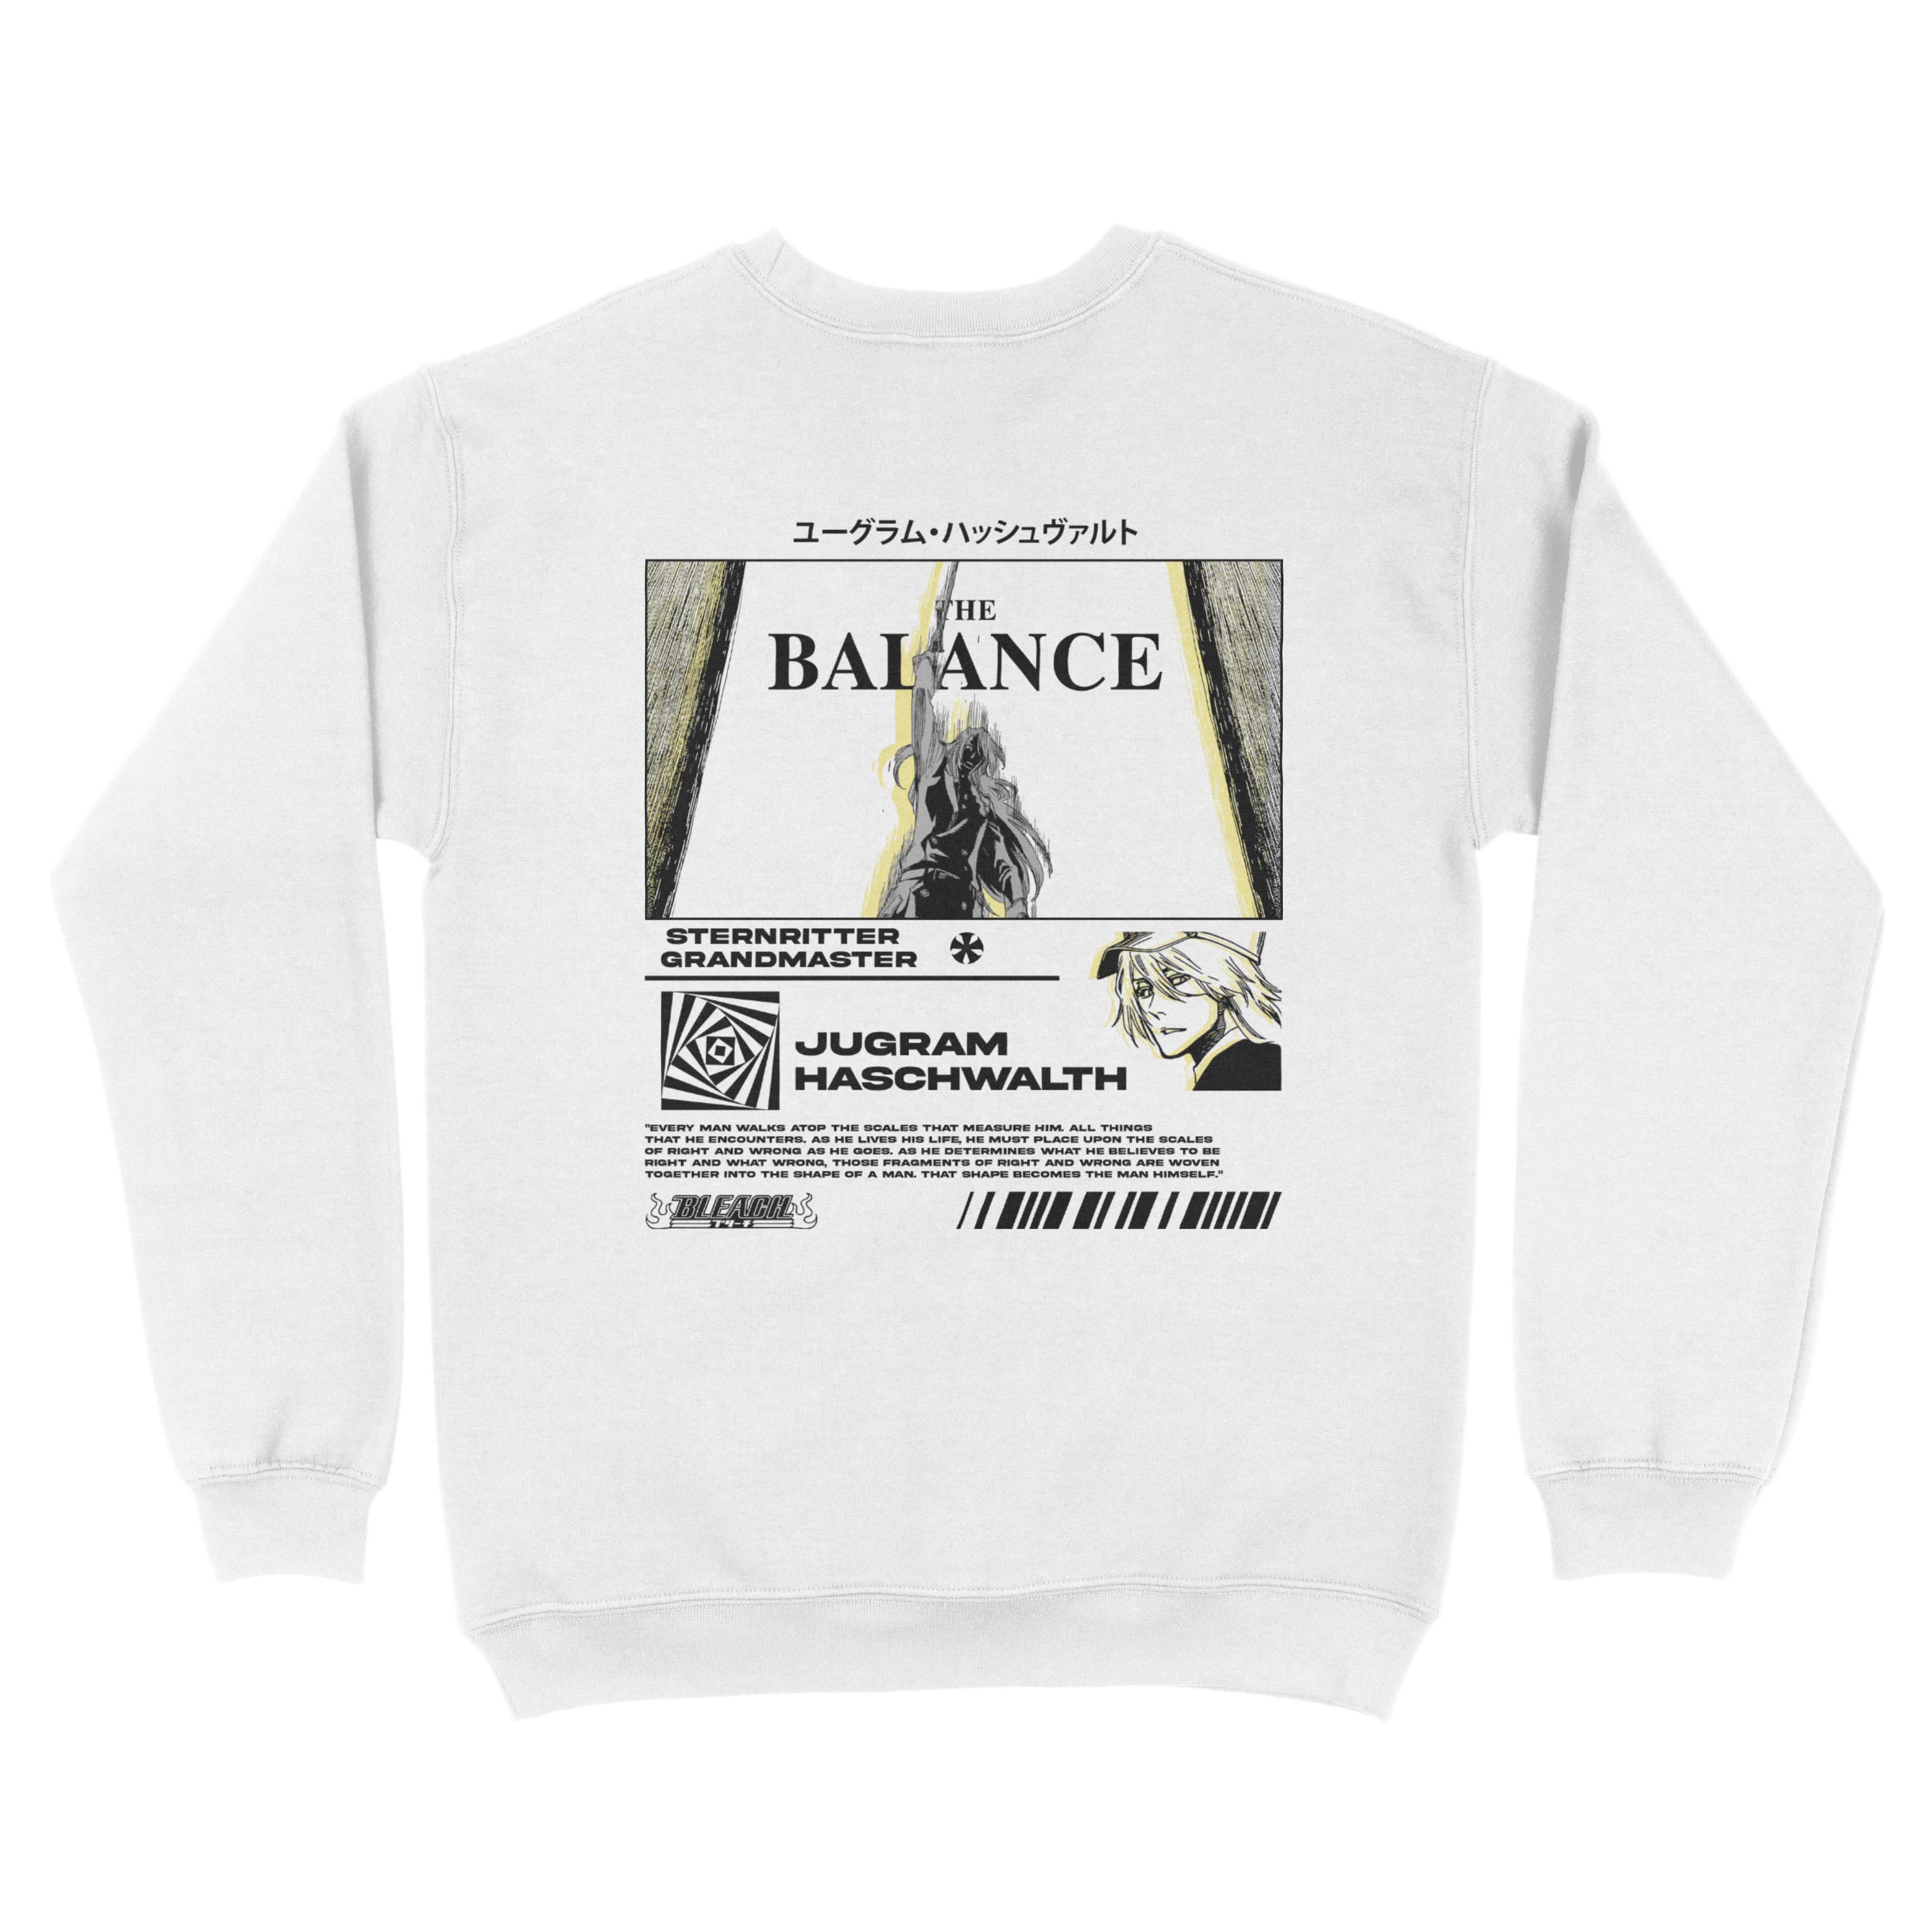 Jugram Hashwalth Bleach | White Sweatshirt TYBW